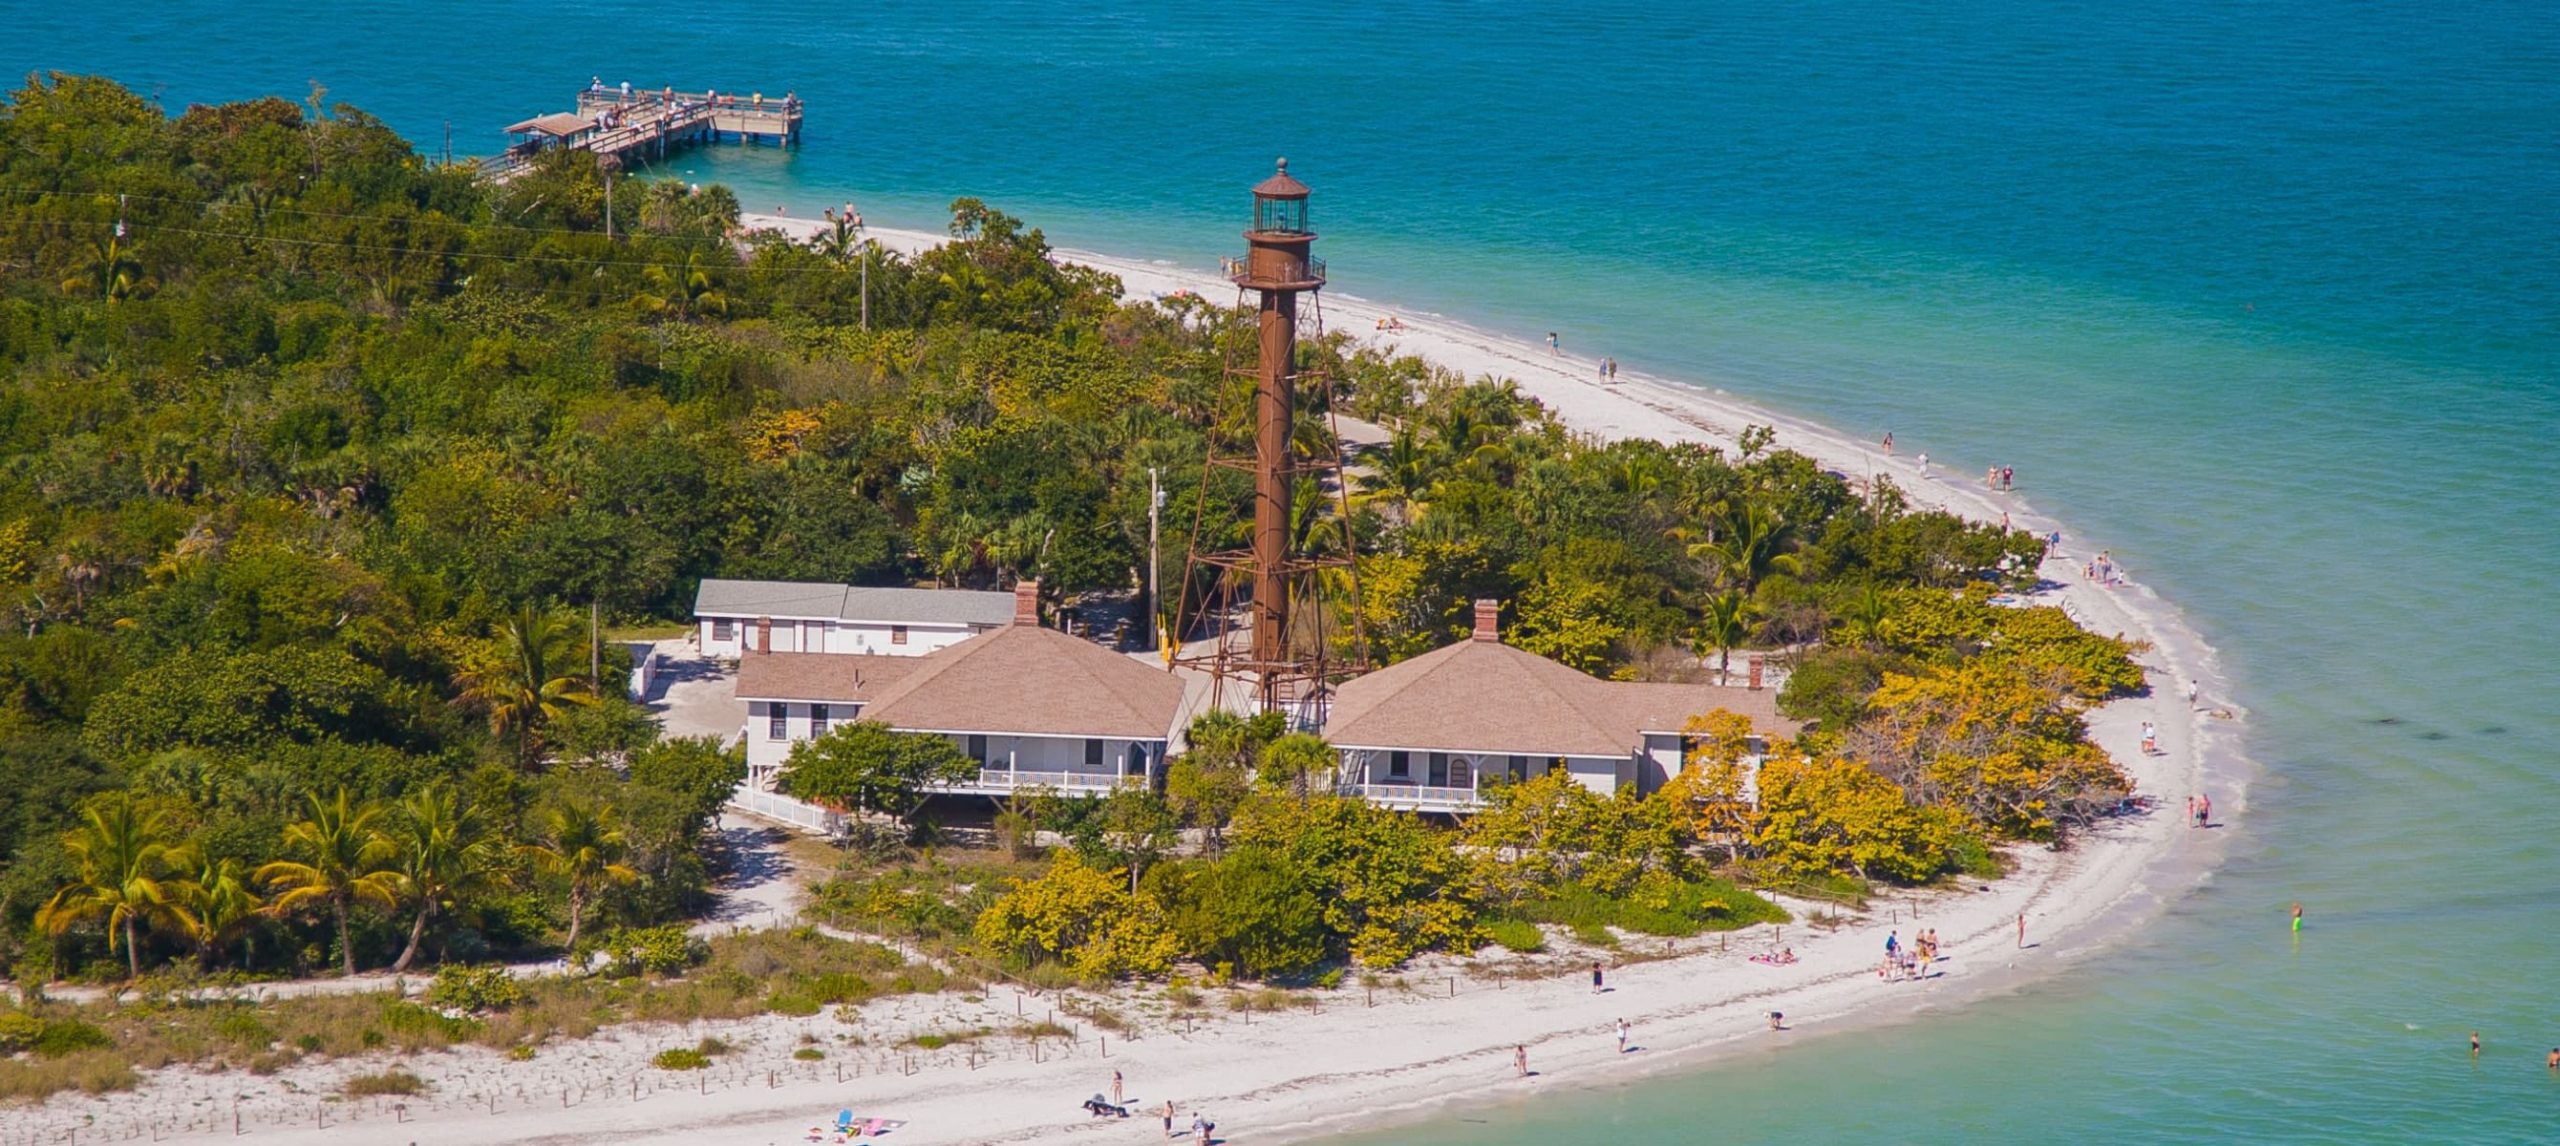 The Sanibel Lighthouse, in the Sanibel Island, Florida.